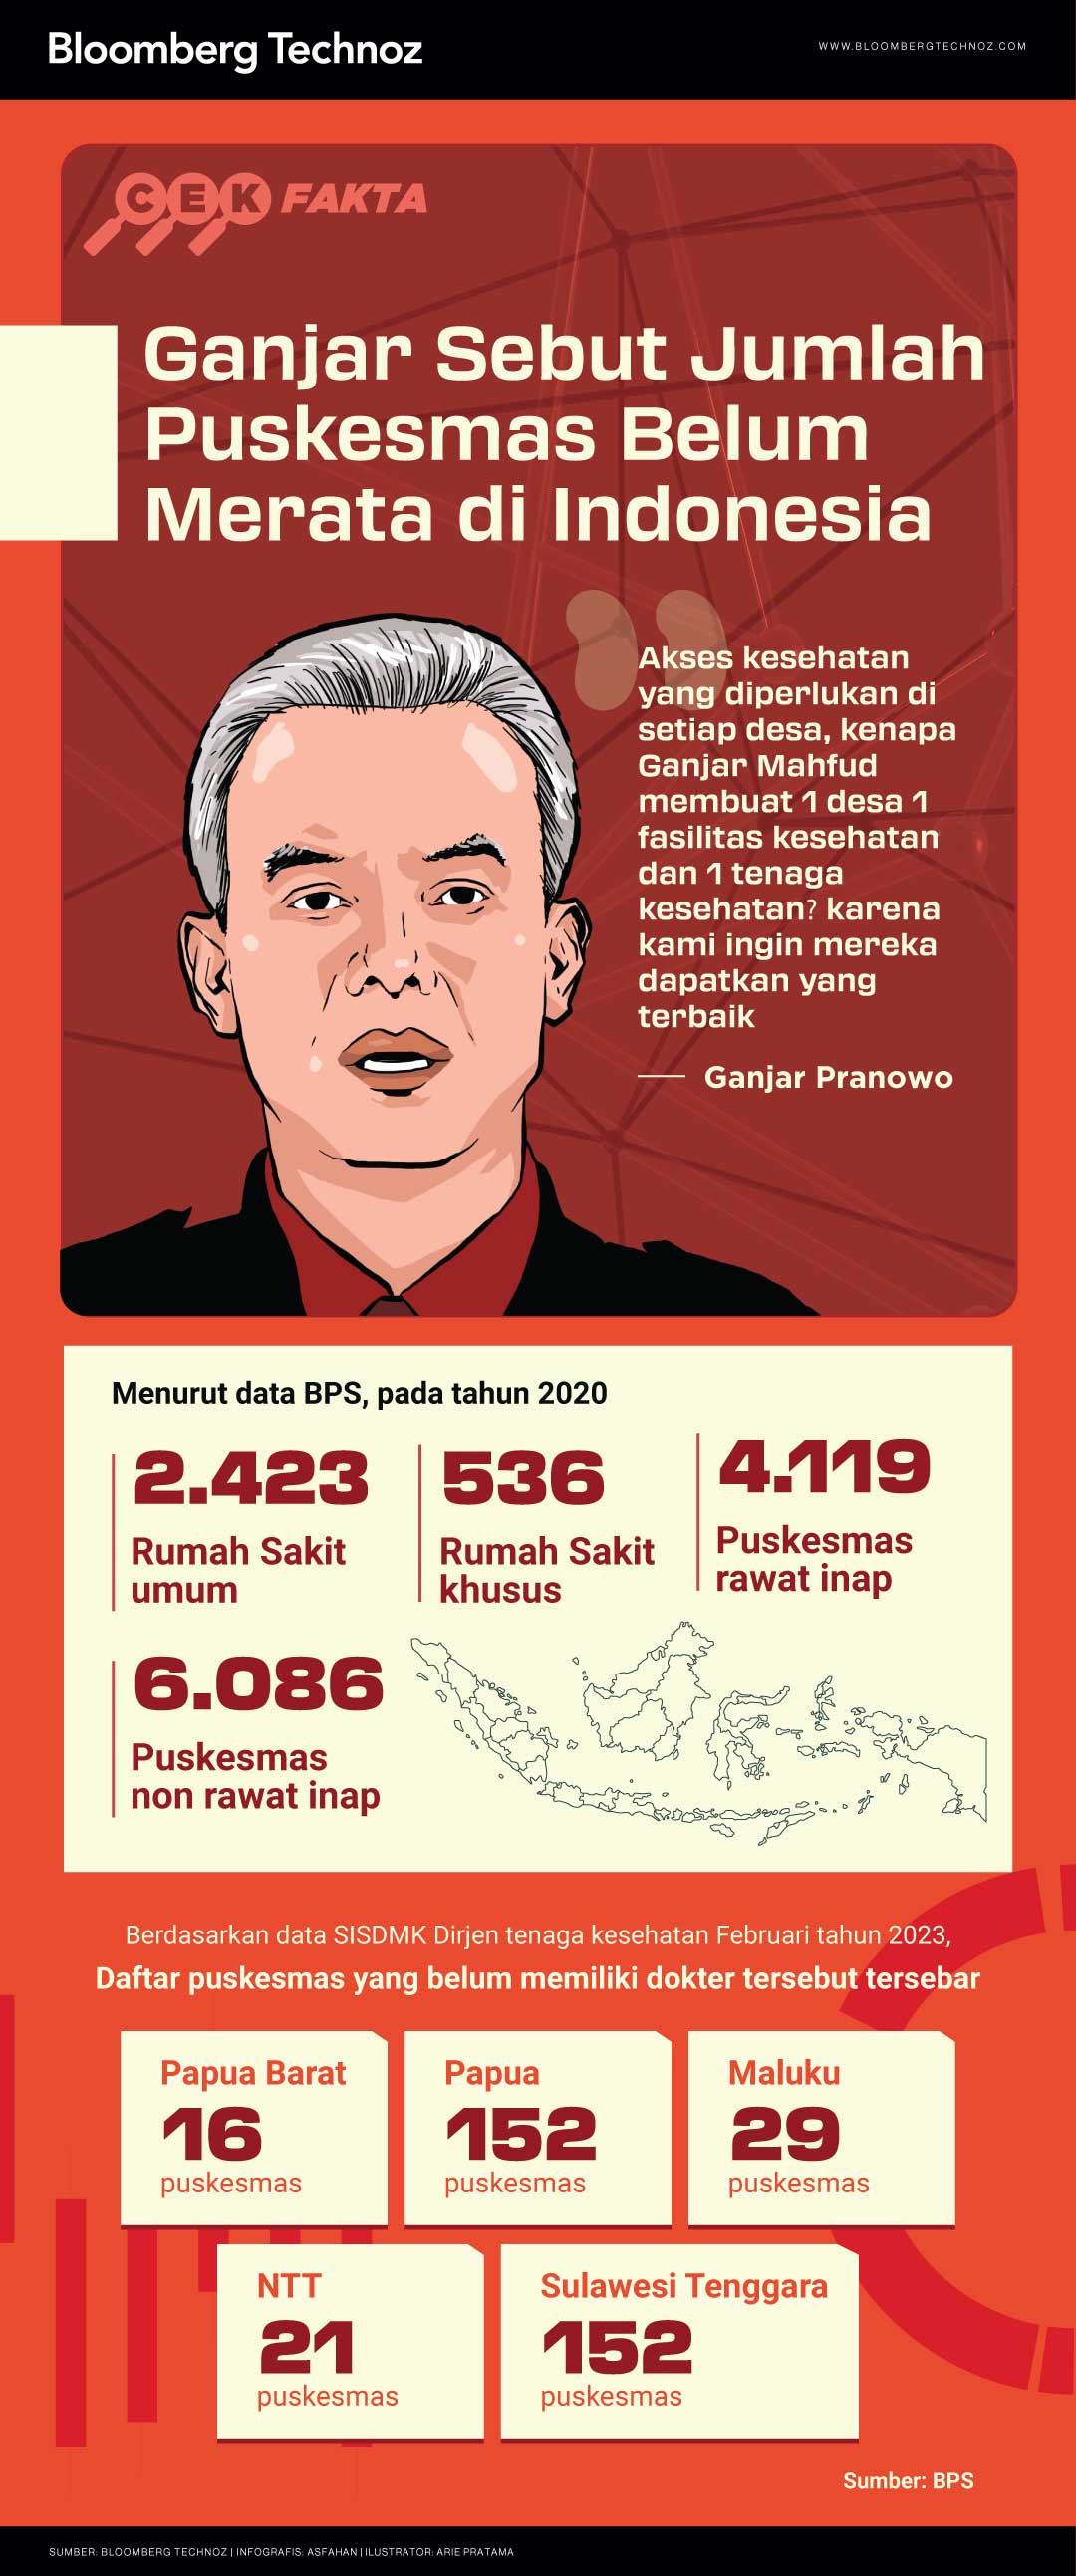 Infografis Cek Fakta Ganjar Sebut Jumlah Puskesmas Belum Merata di Indonesia (Arie Pratama/Bloomberg Technoz)